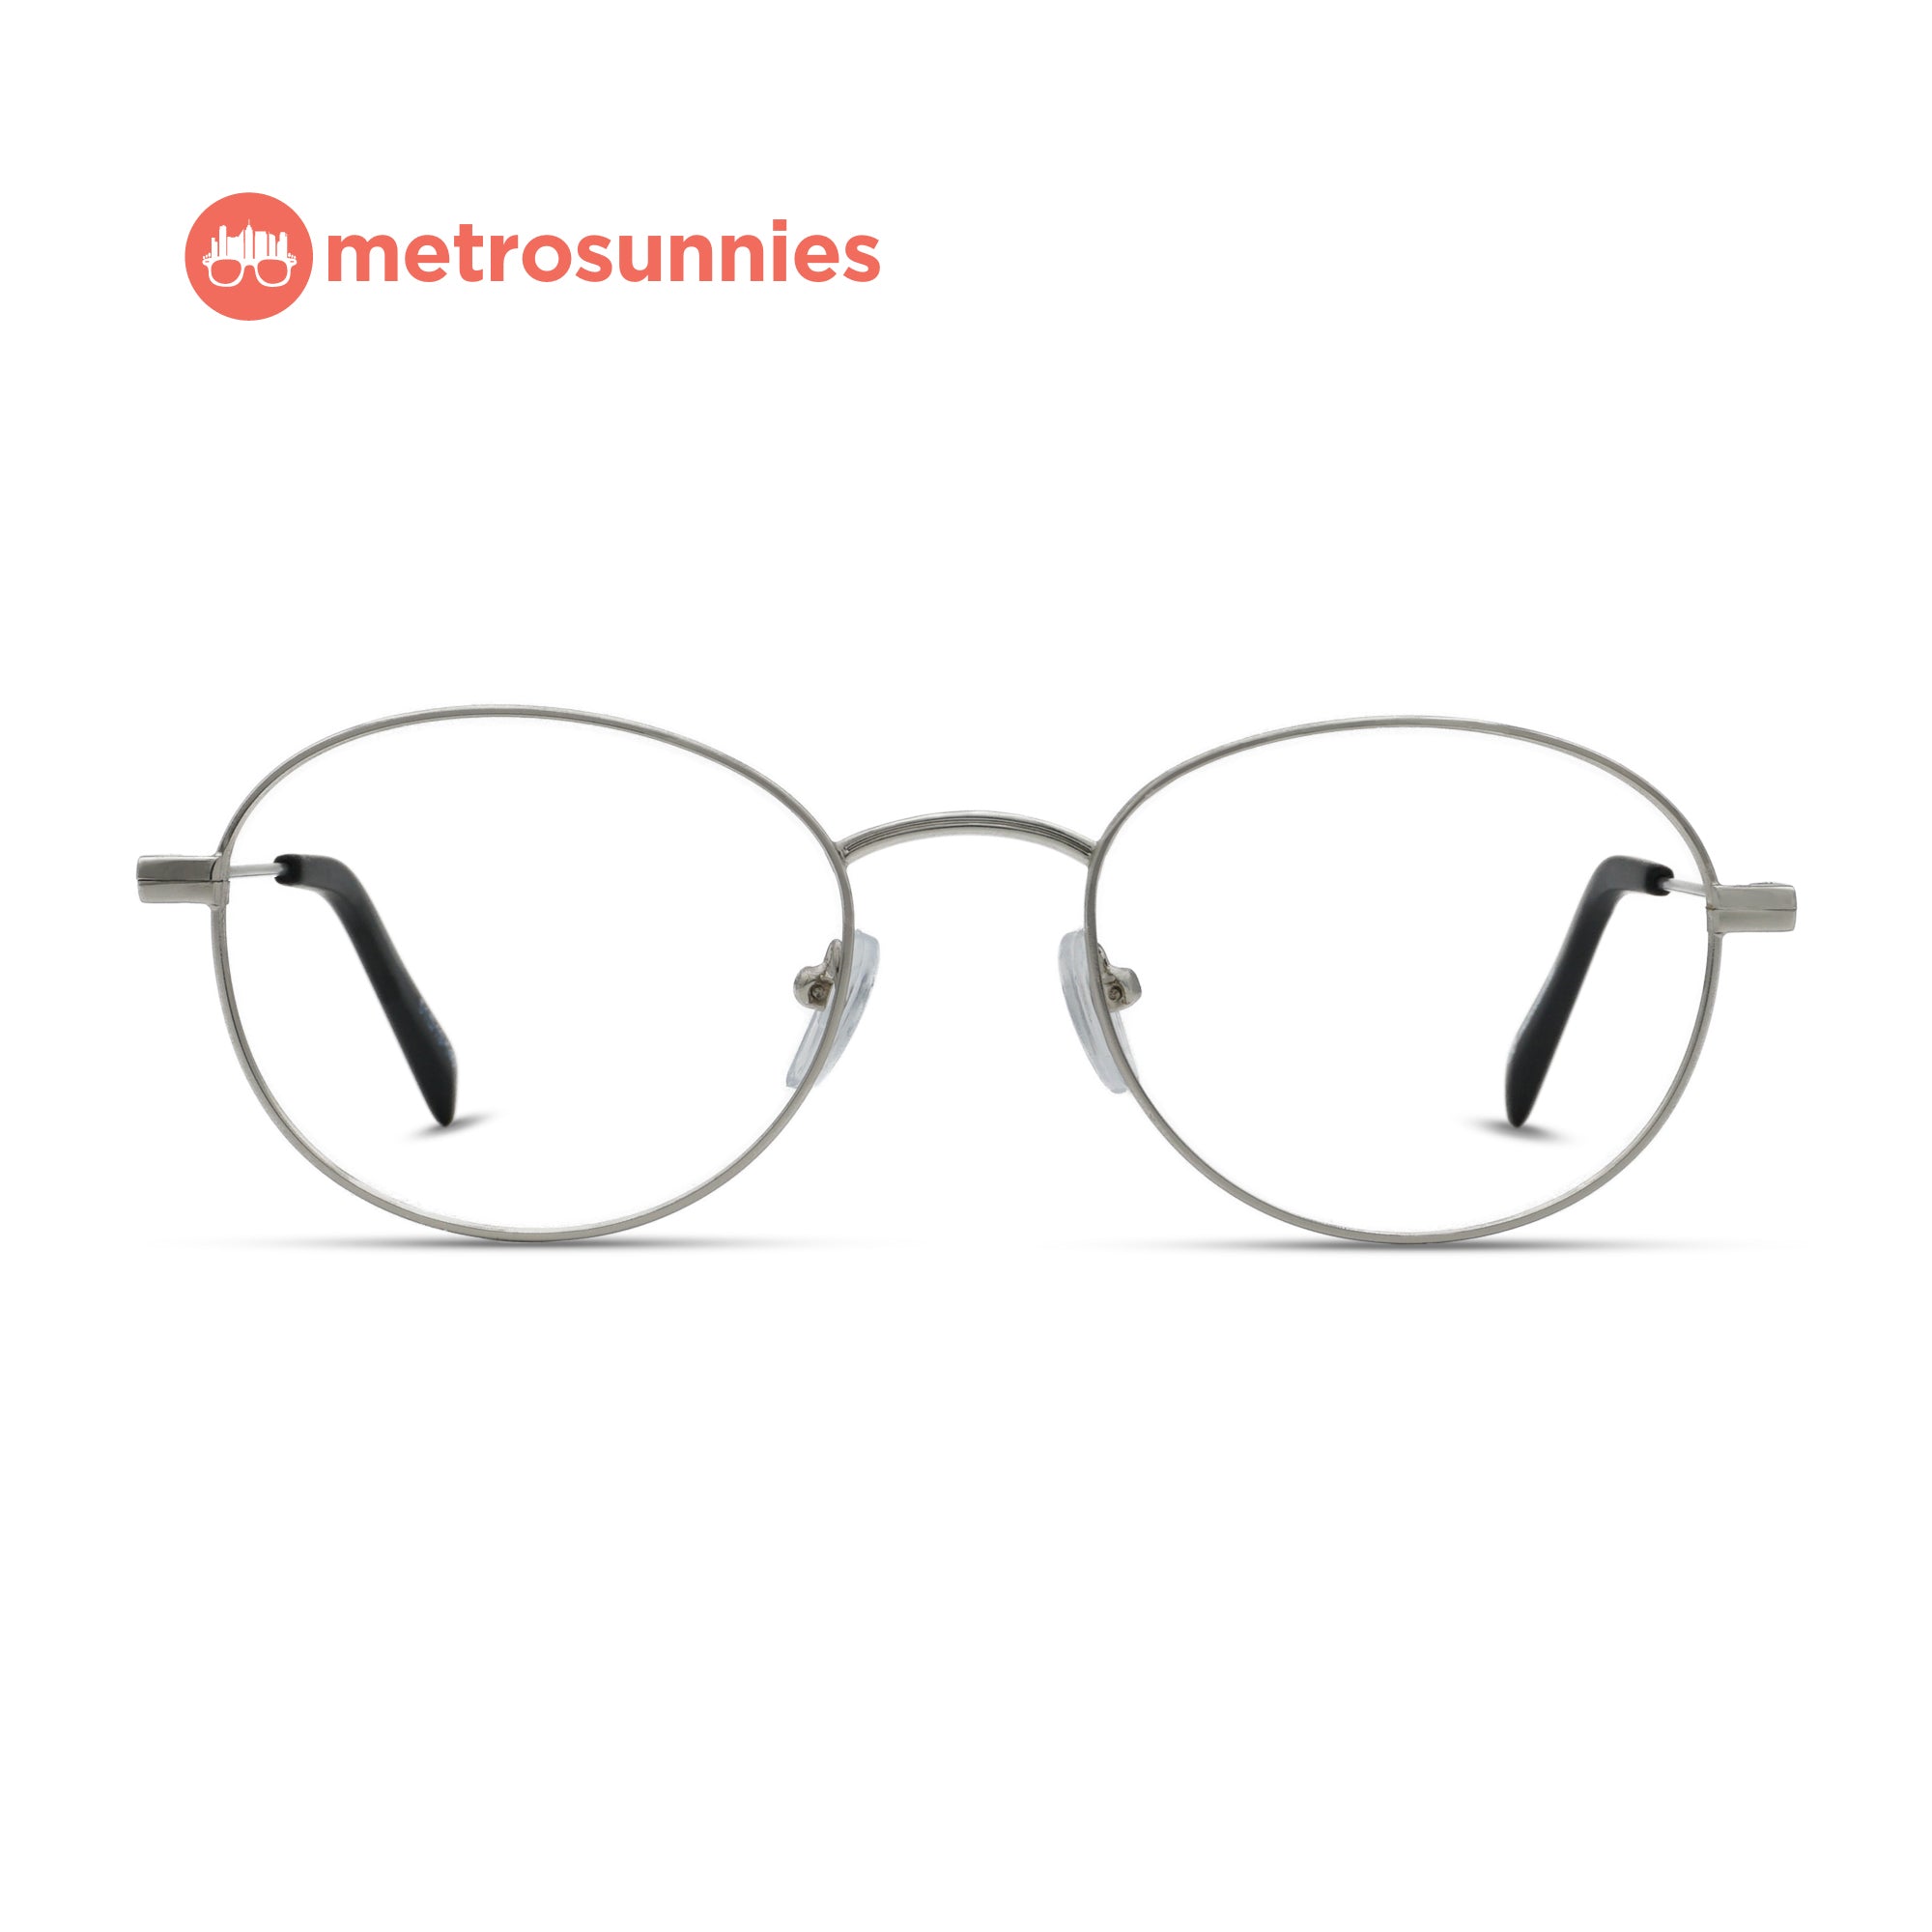 MetroSunnies Jet Specs (Silver) / Replaceable Lens / Eyeglasses for Men and Women